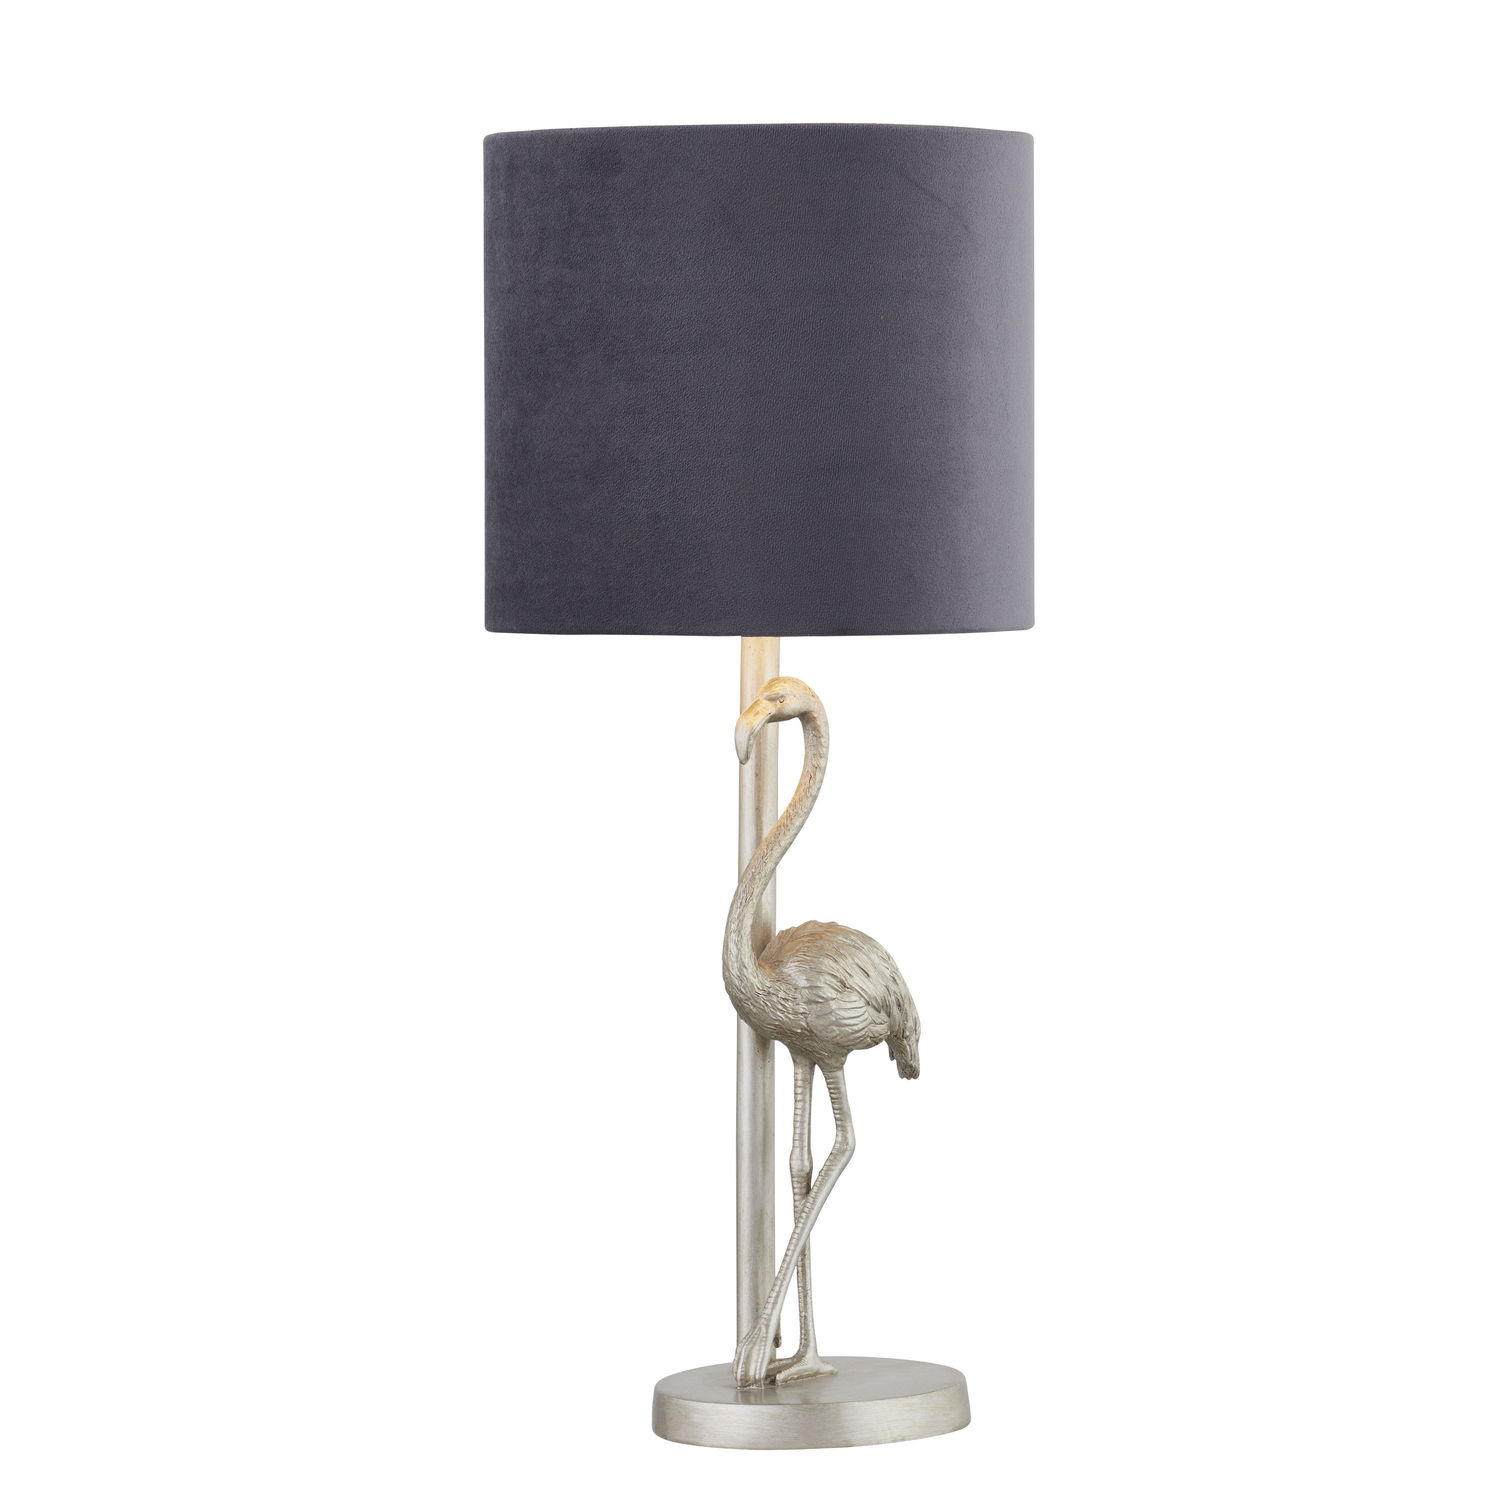 Flamingo Silver Lamp With Grey Shade - Image 3